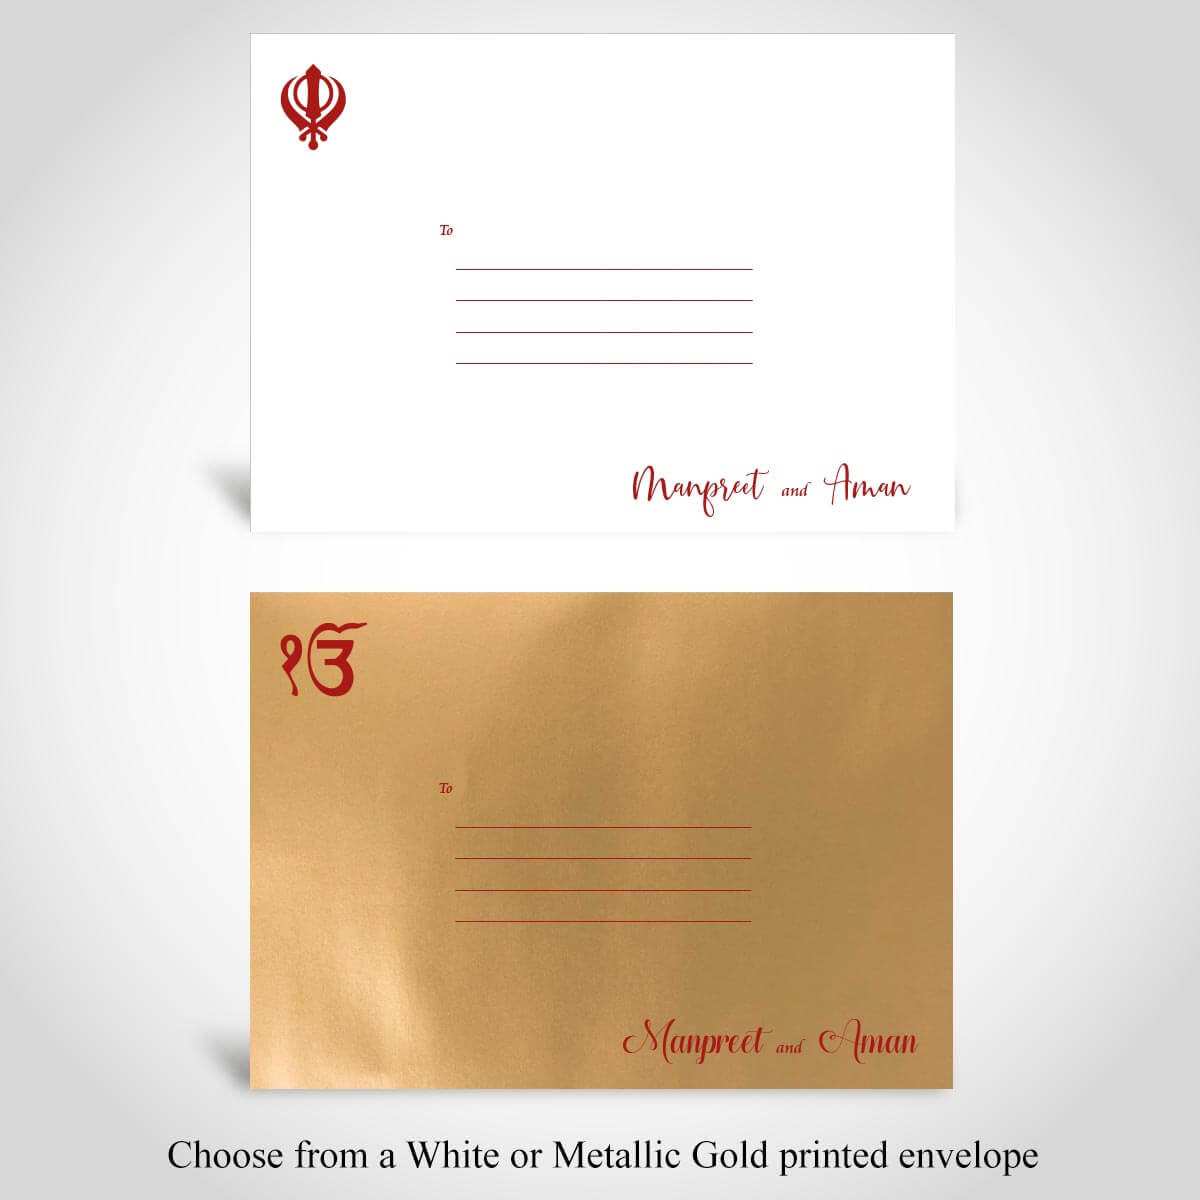 Punjabi Wedding Invitation, Gold Foiled – CFS475